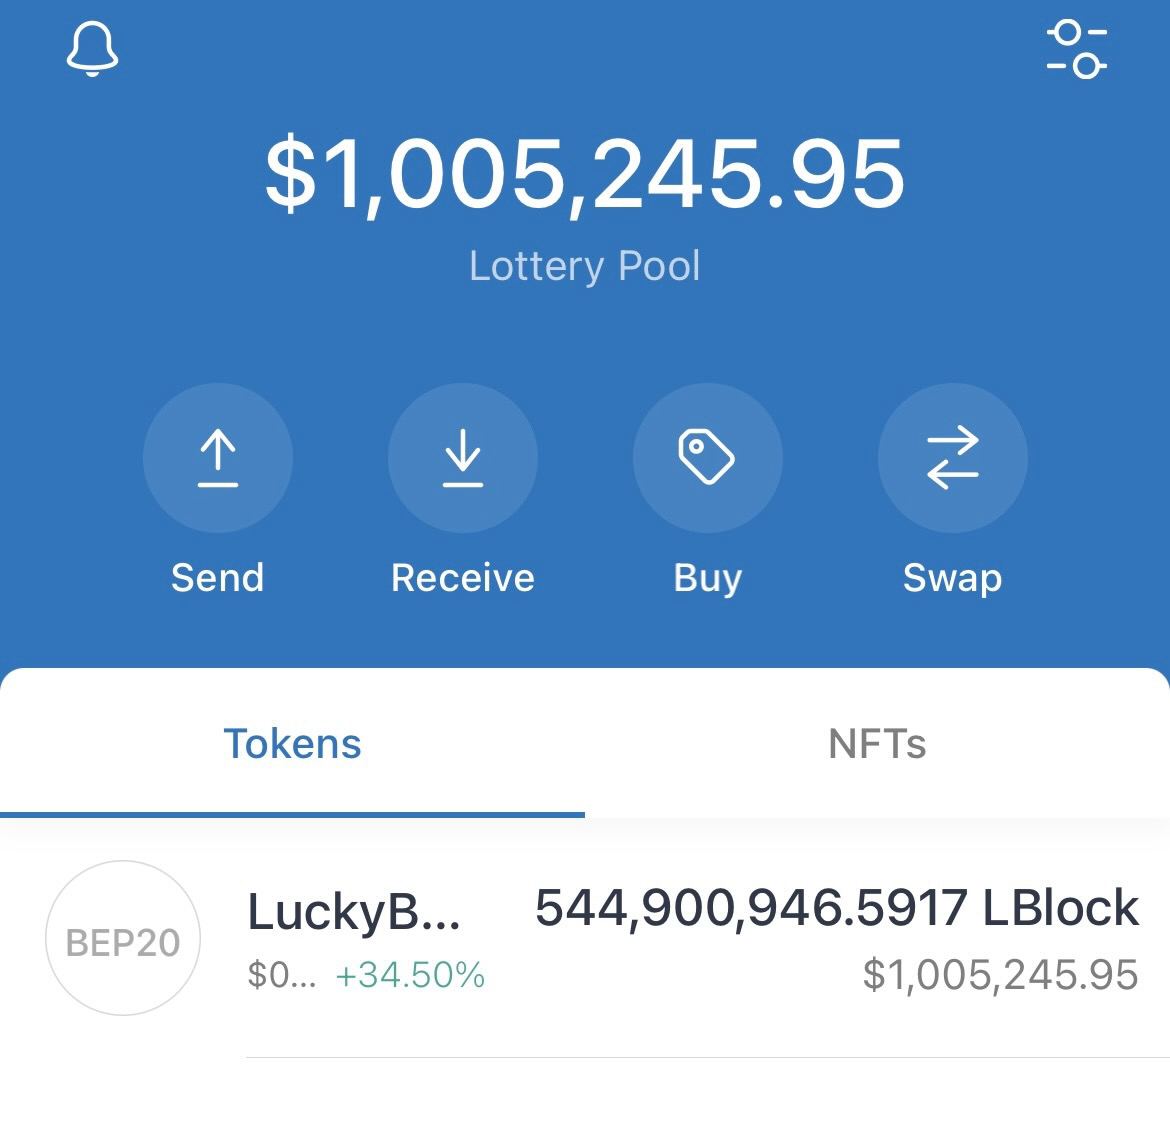 lucky block lottery pool